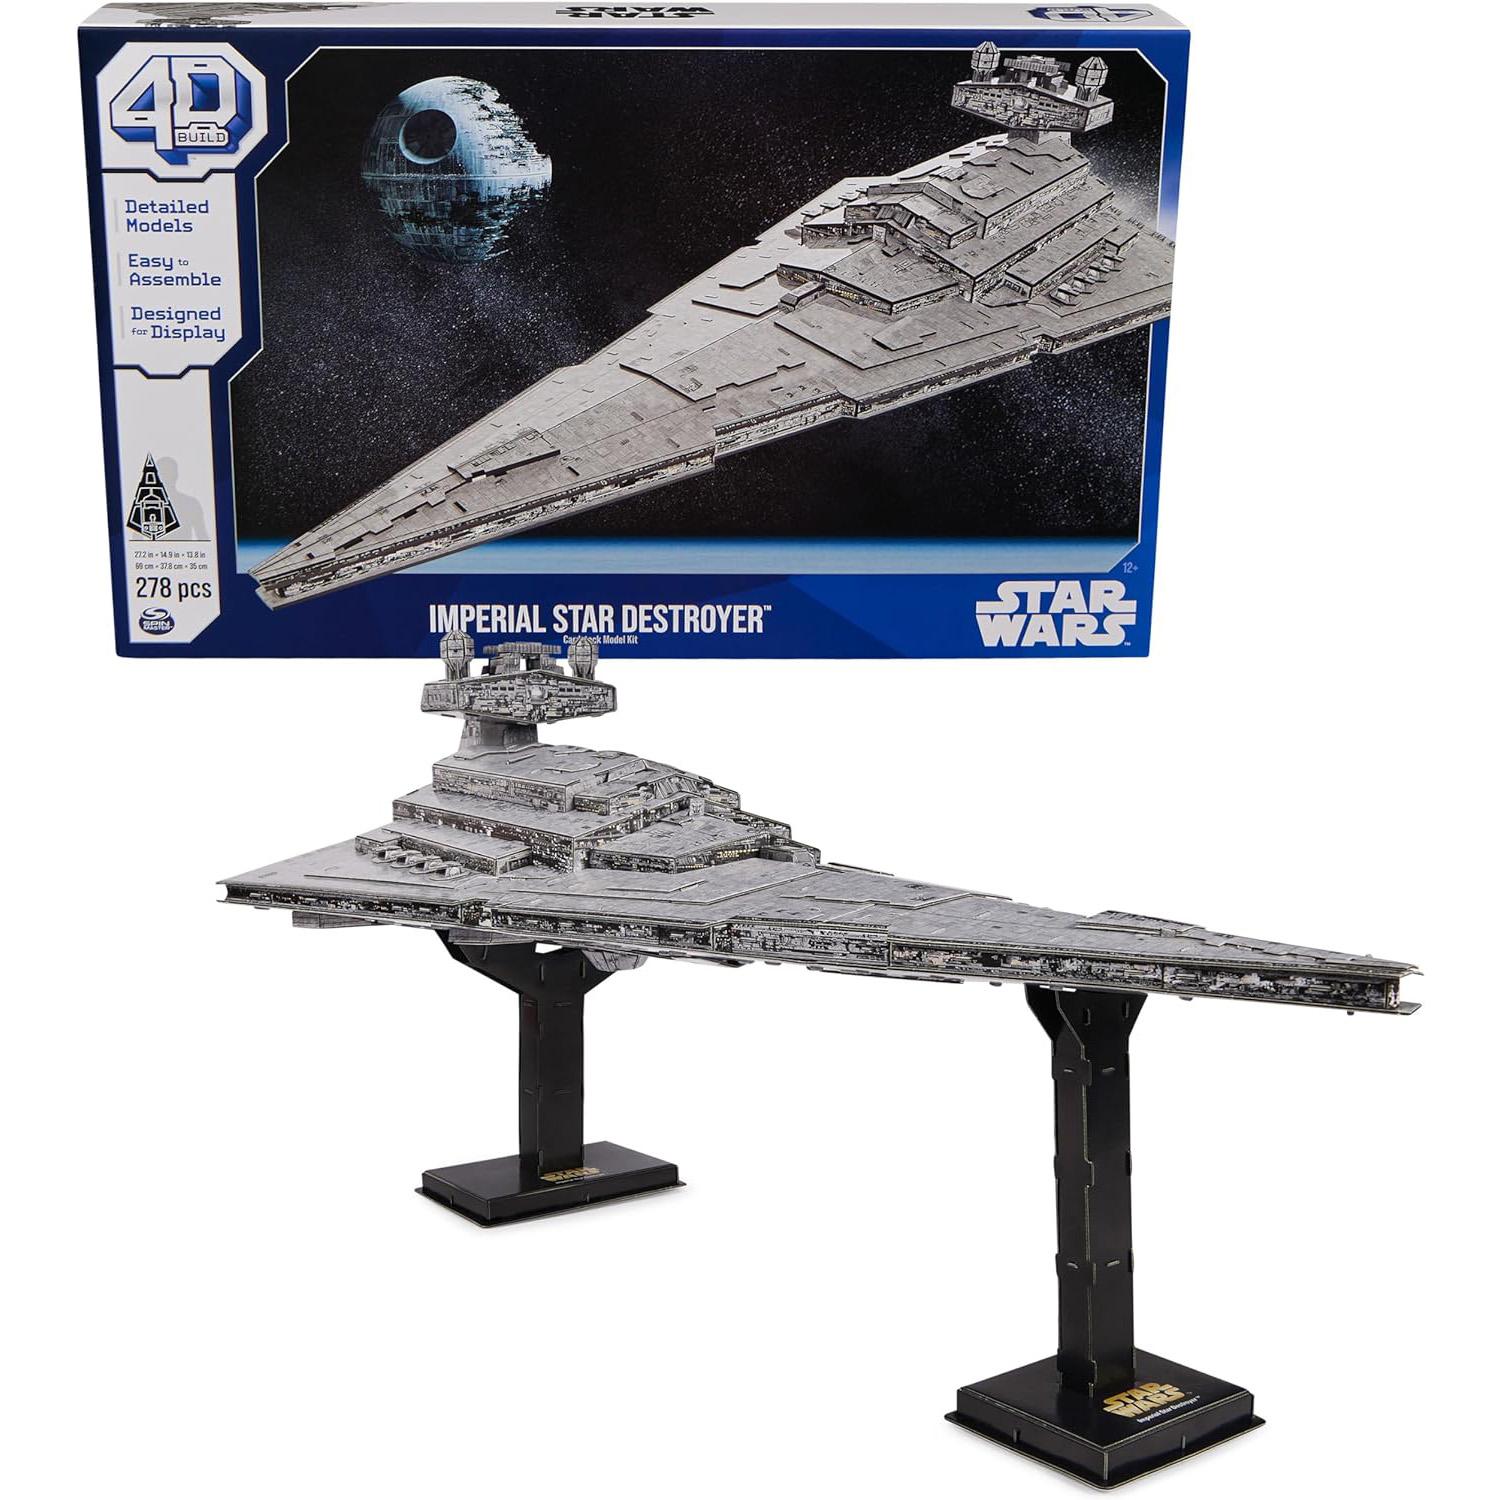 Star Wars Deluxe Imperial Star Destroyer Cardstock 3D Model Kit 4D for $8.99